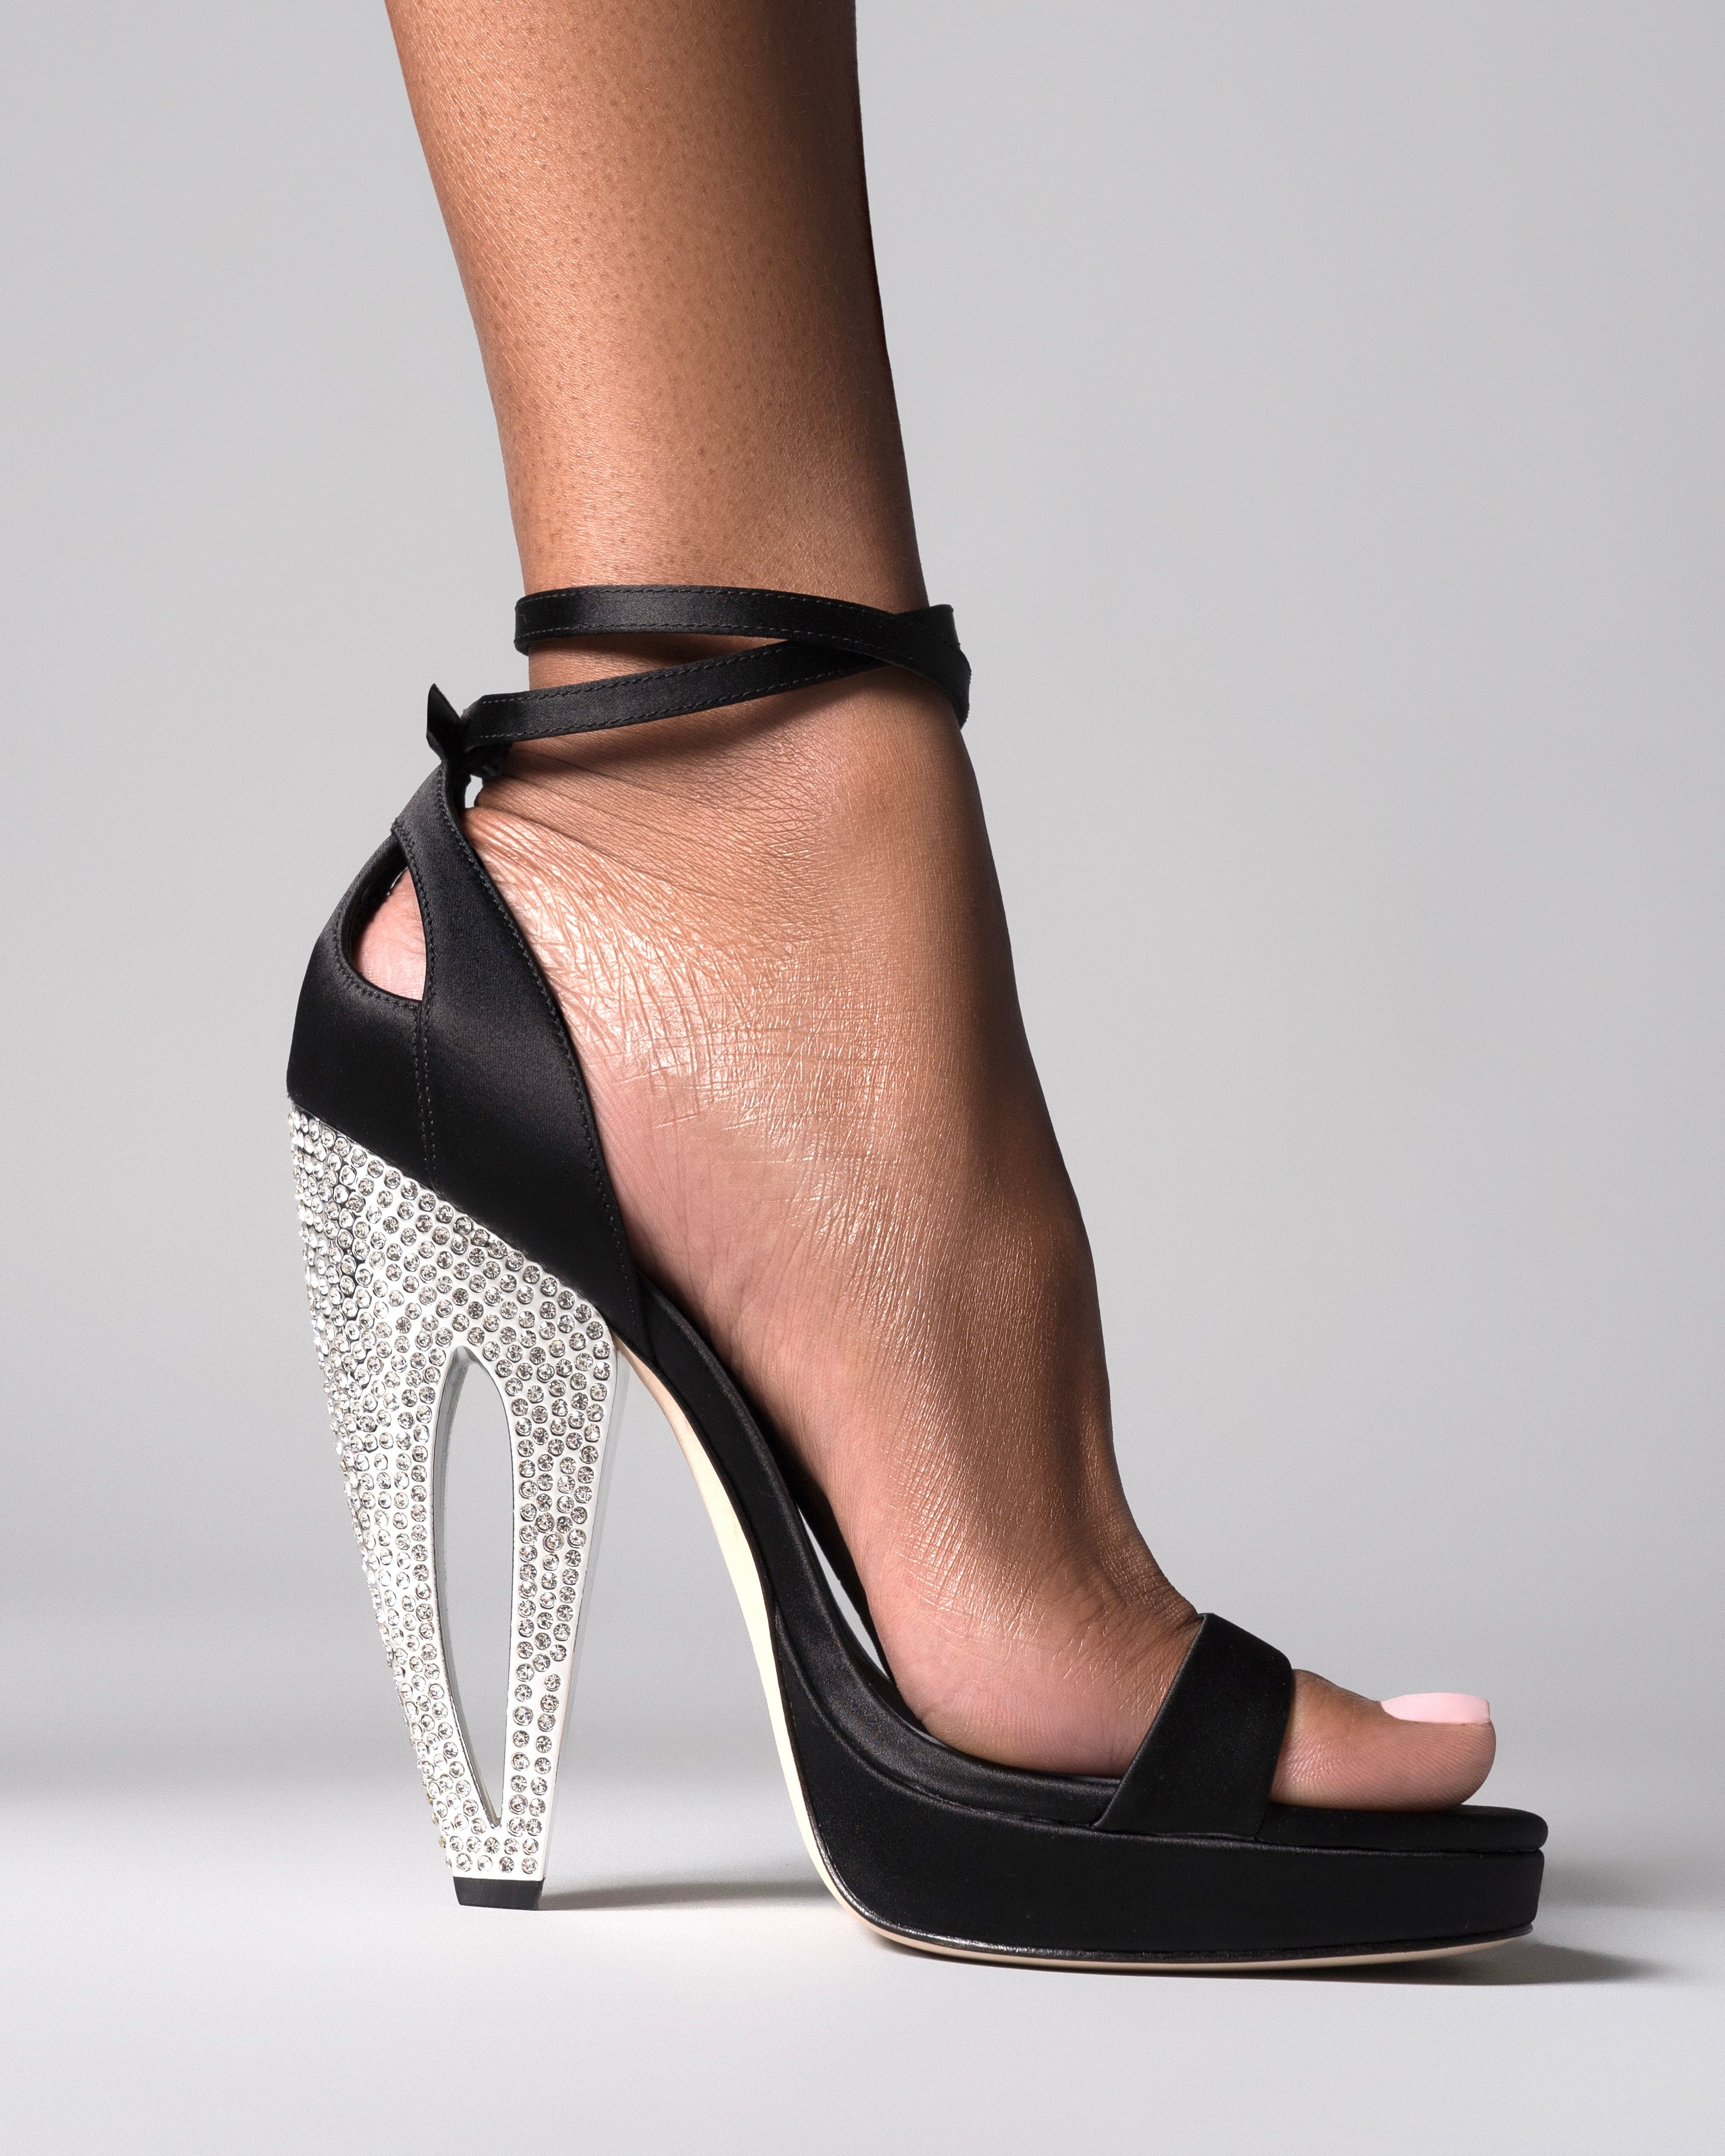 Fancy Sandals for Women | Ladies Sandals Online in india | Fizzy Goblet